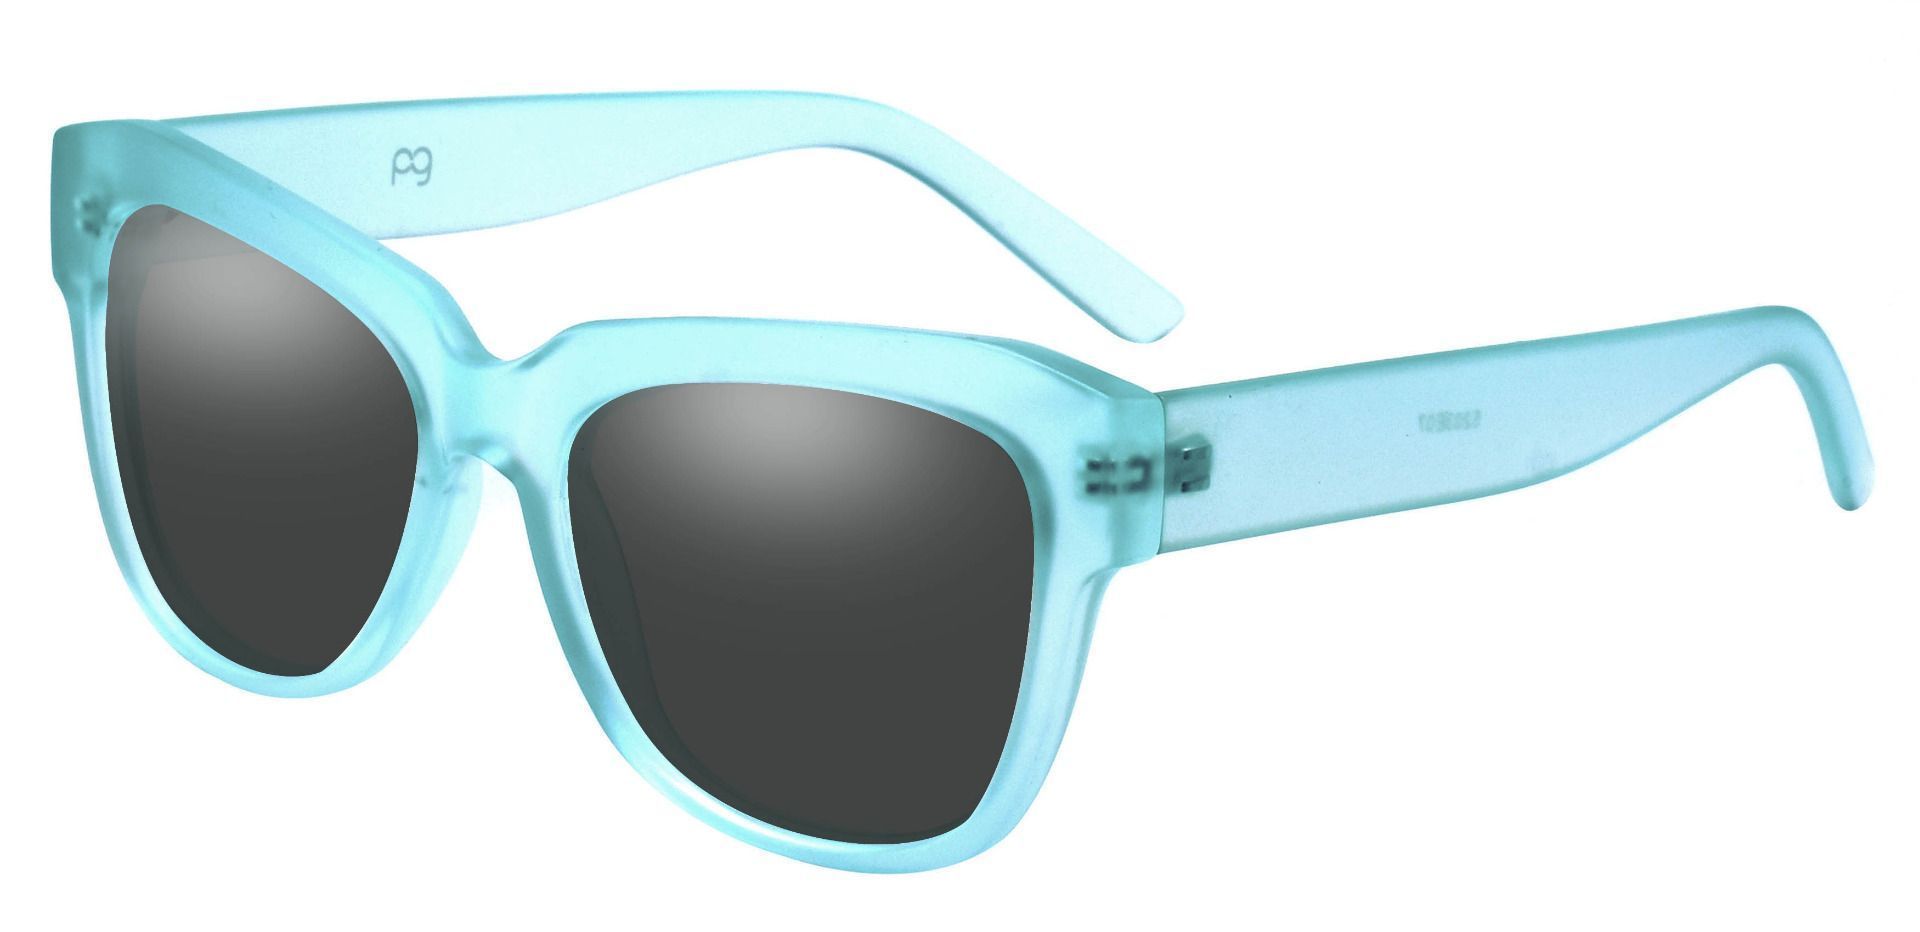 Gina Cat-Eye Prescription Sunglasses - Blue Frame With Gray Lenses